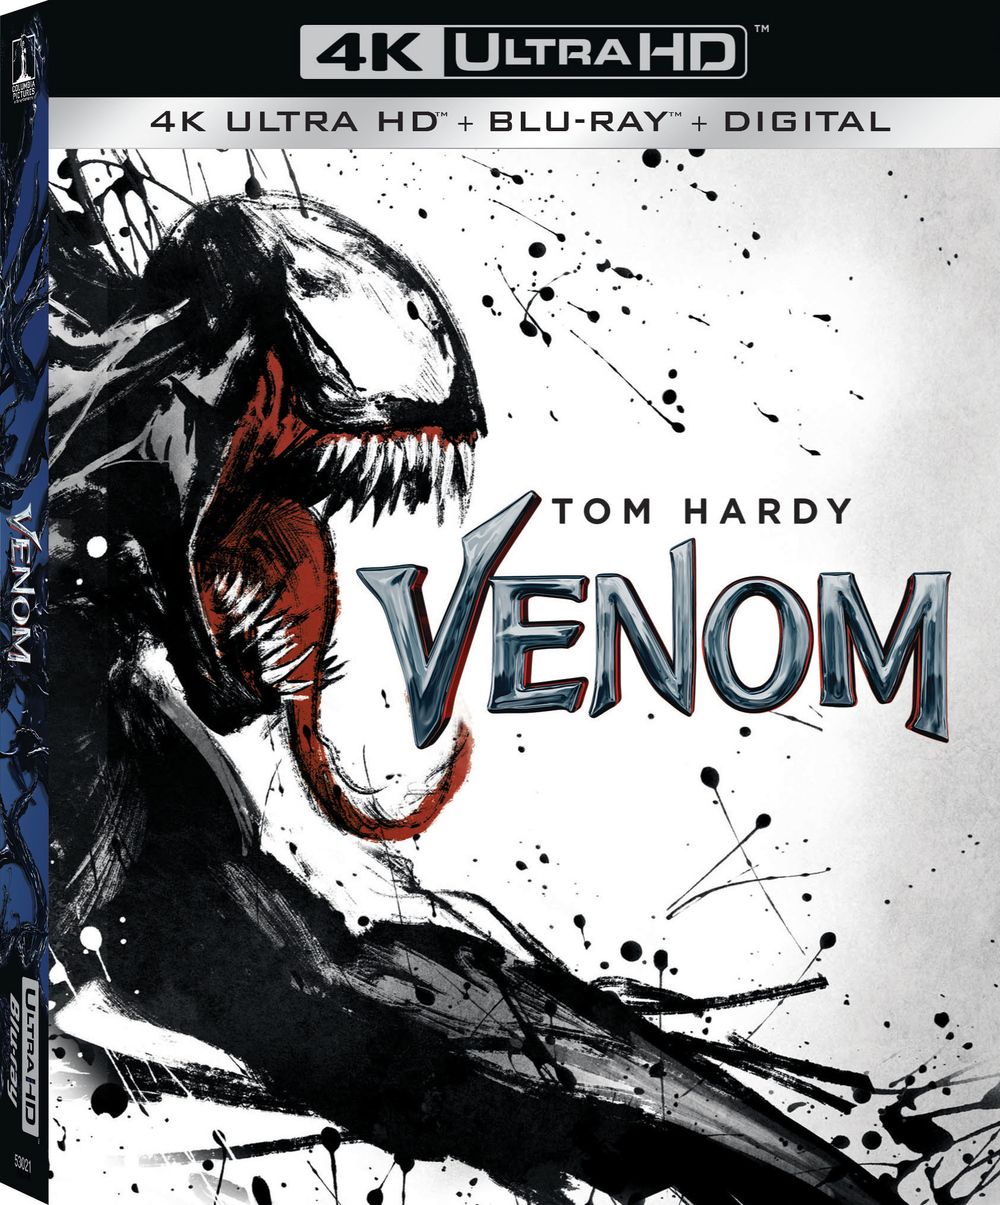 Venom DVD cover art